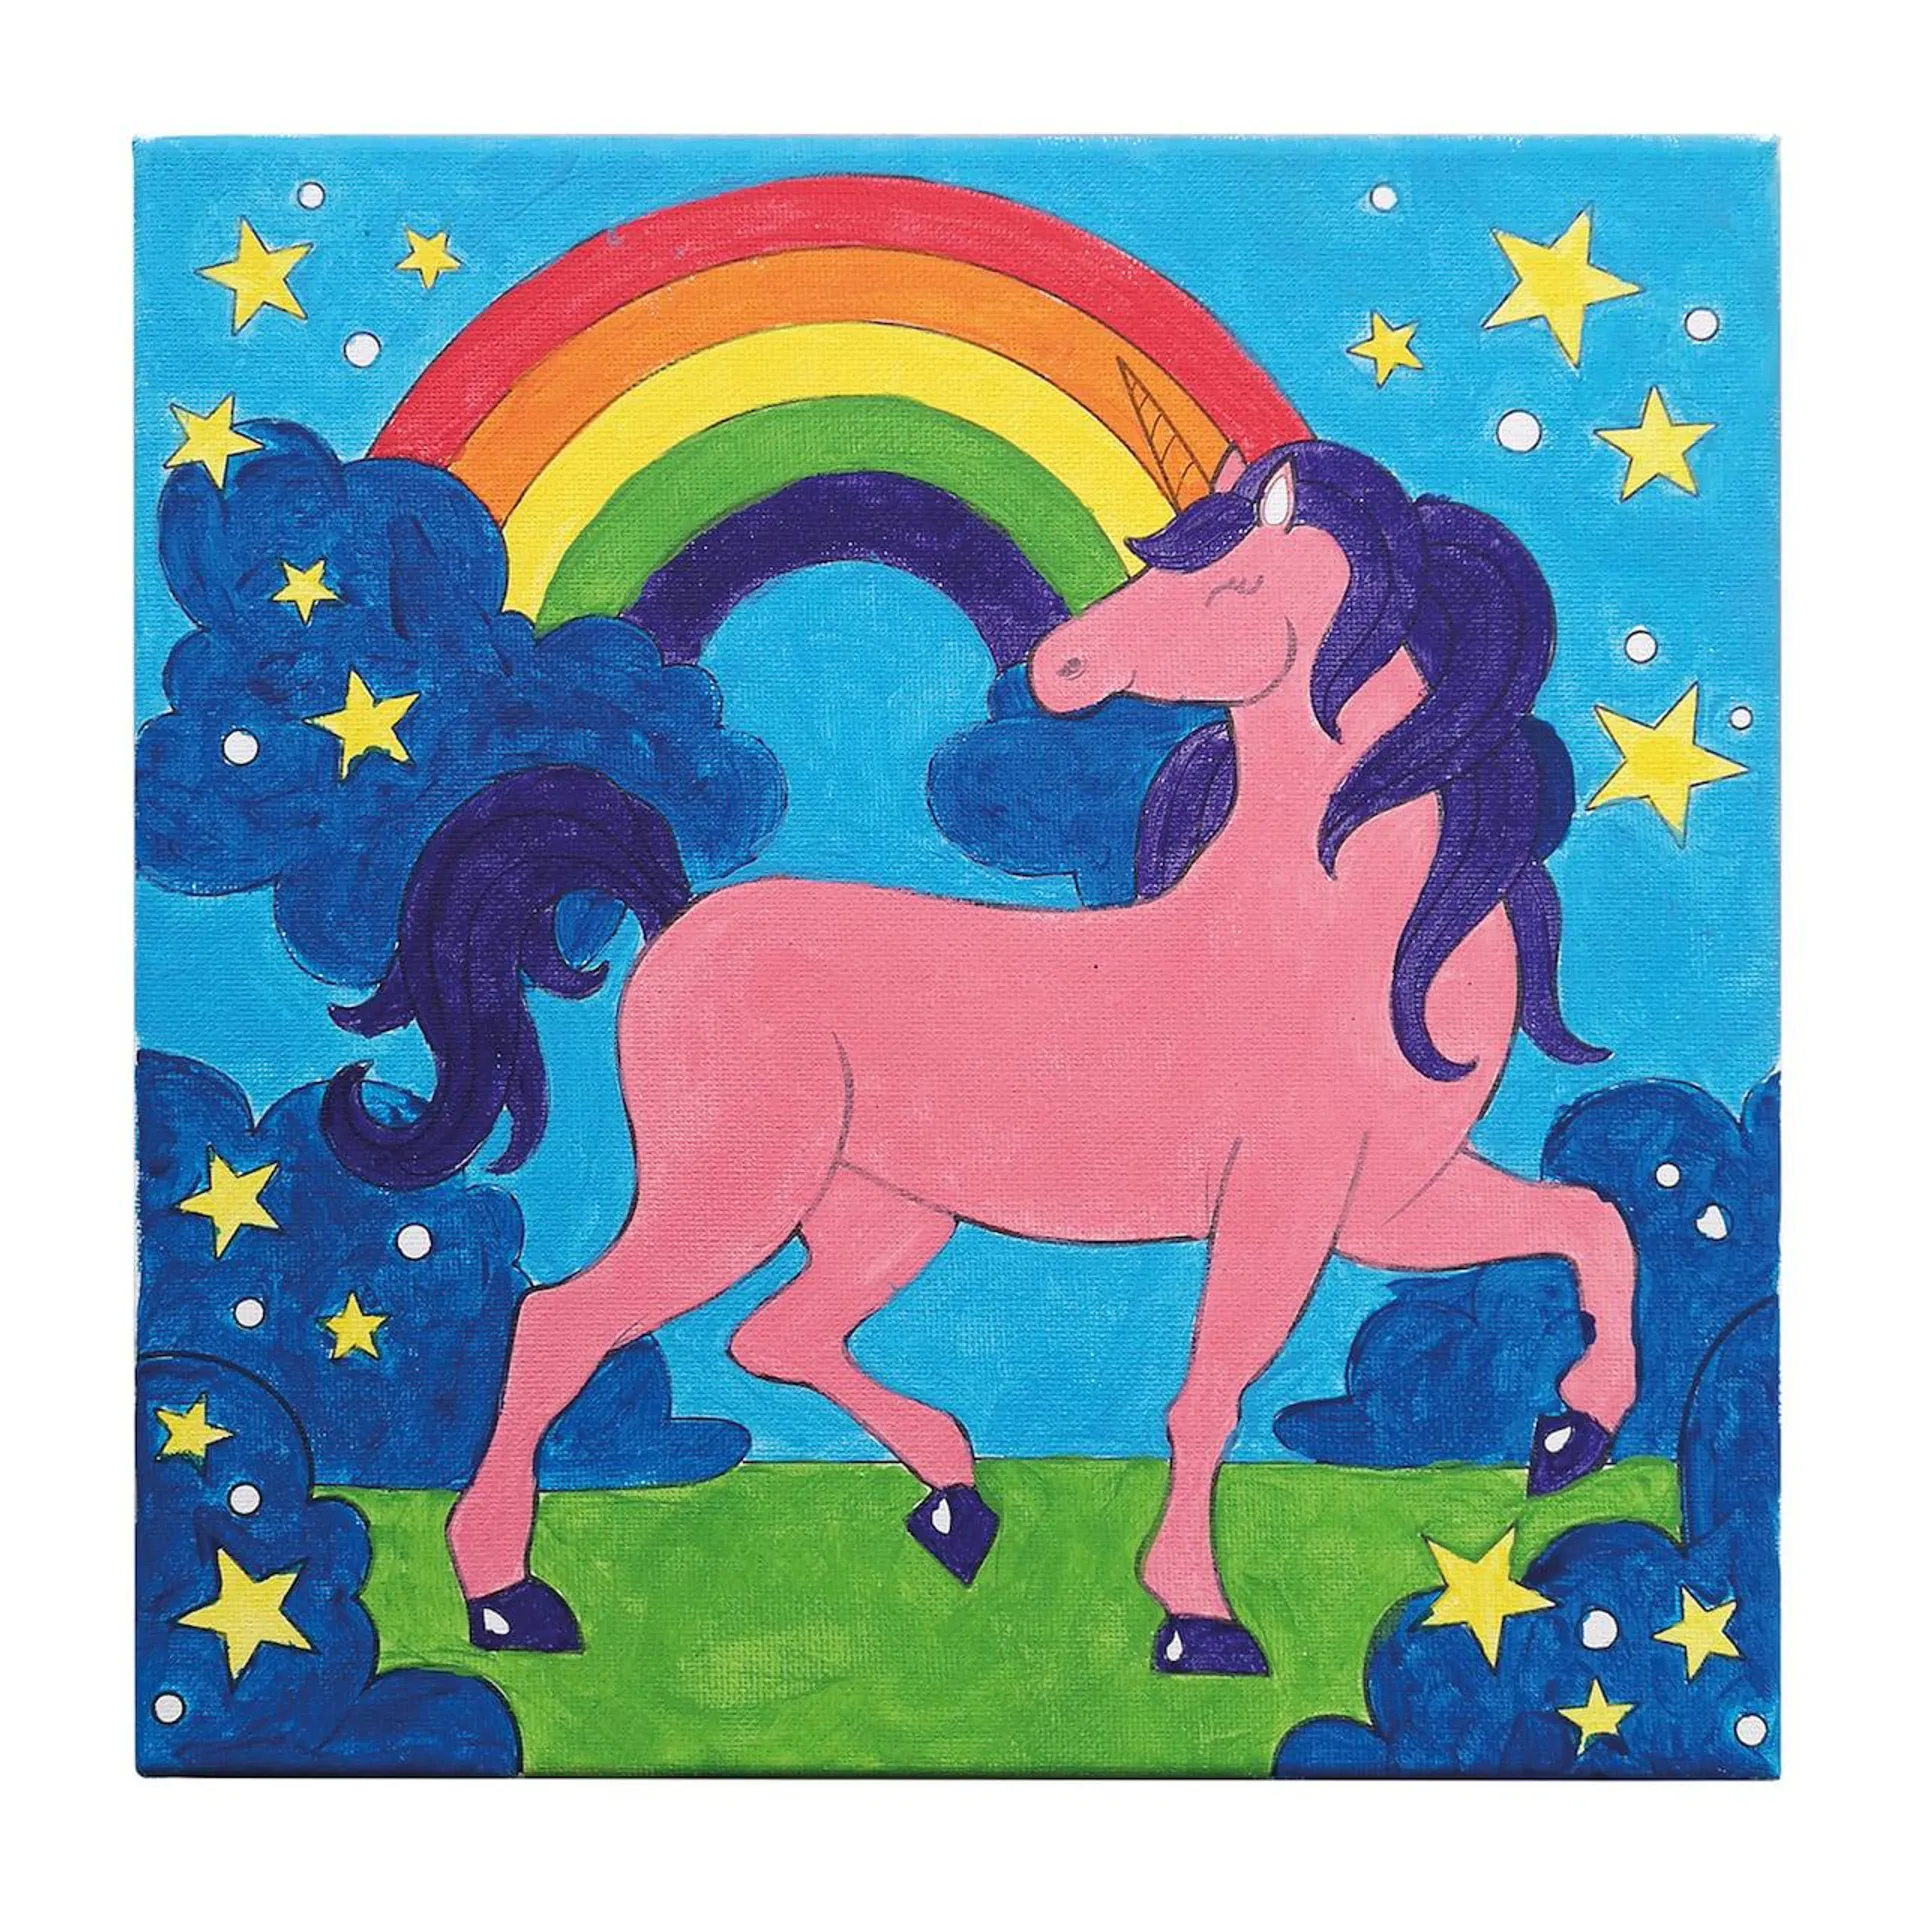 Unicorn Canvas Painting Kit by Creatology™